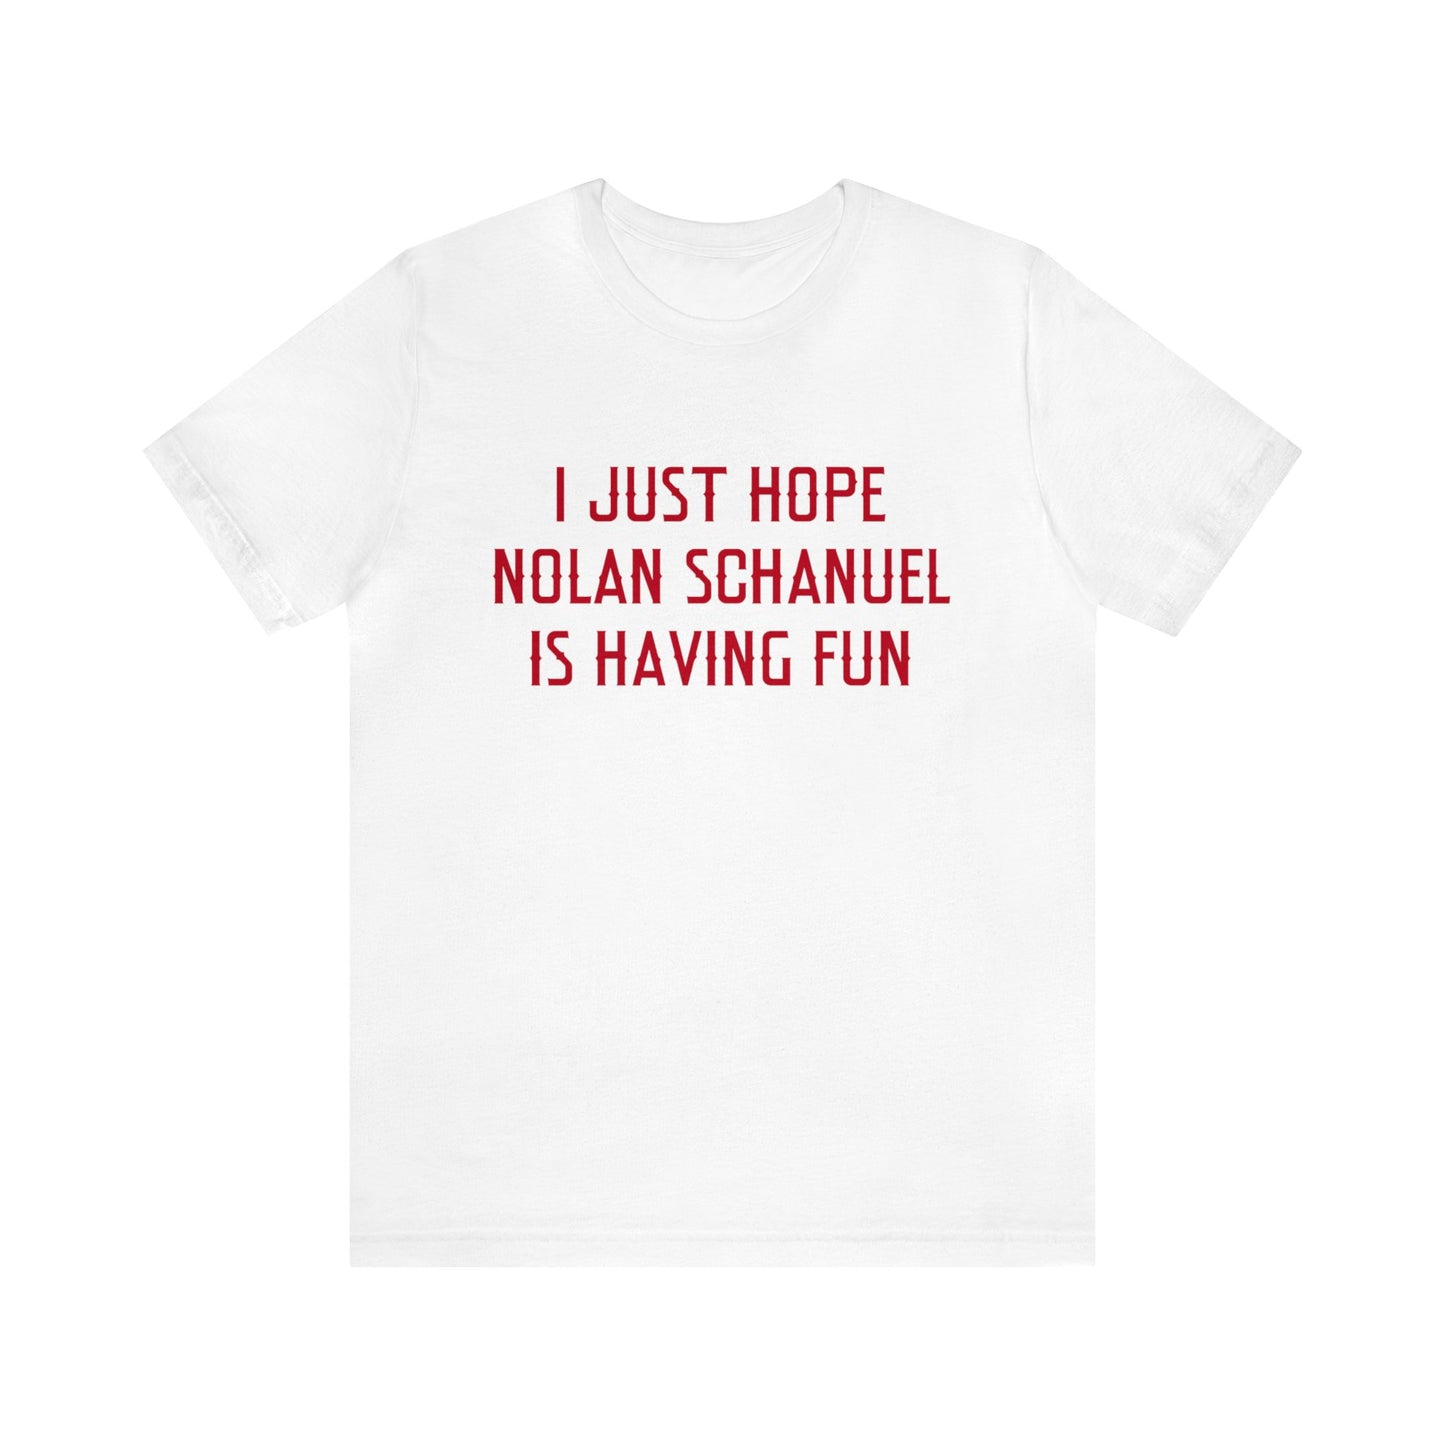 Nolan Schanuel Having Fun - Unisex T-shirt